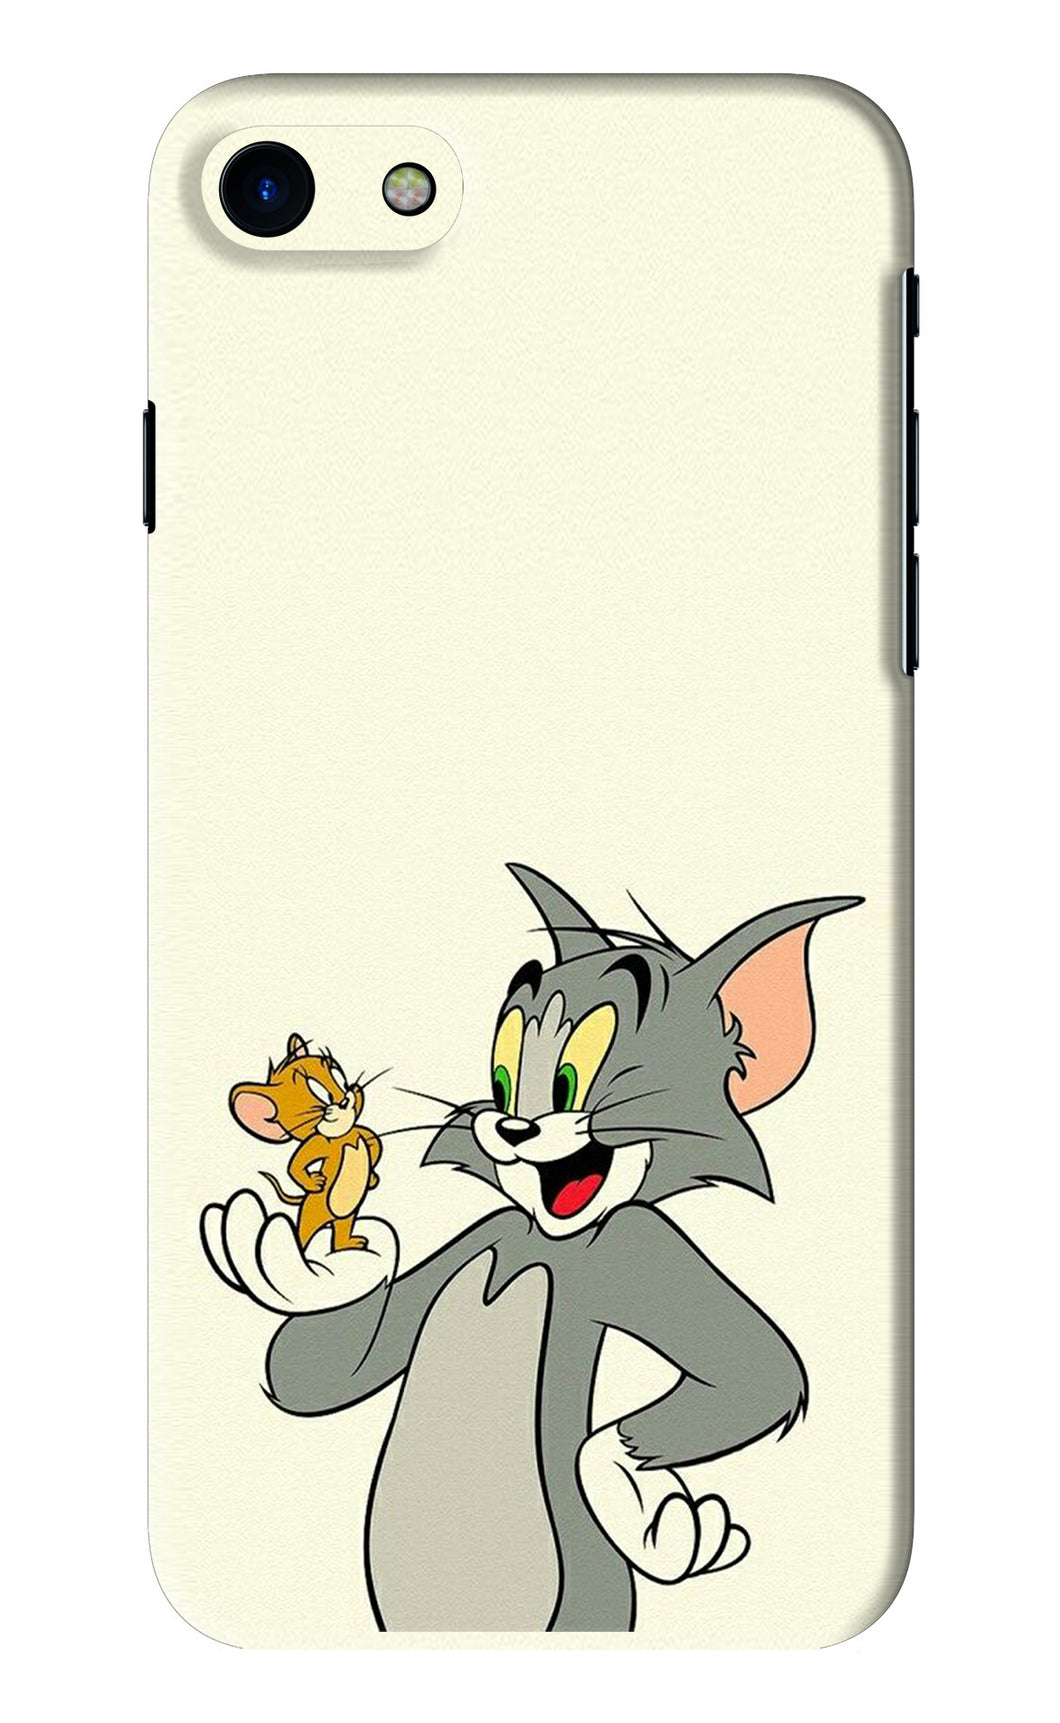 Tom & Jerry iPhone 8 Back Skin Wrap